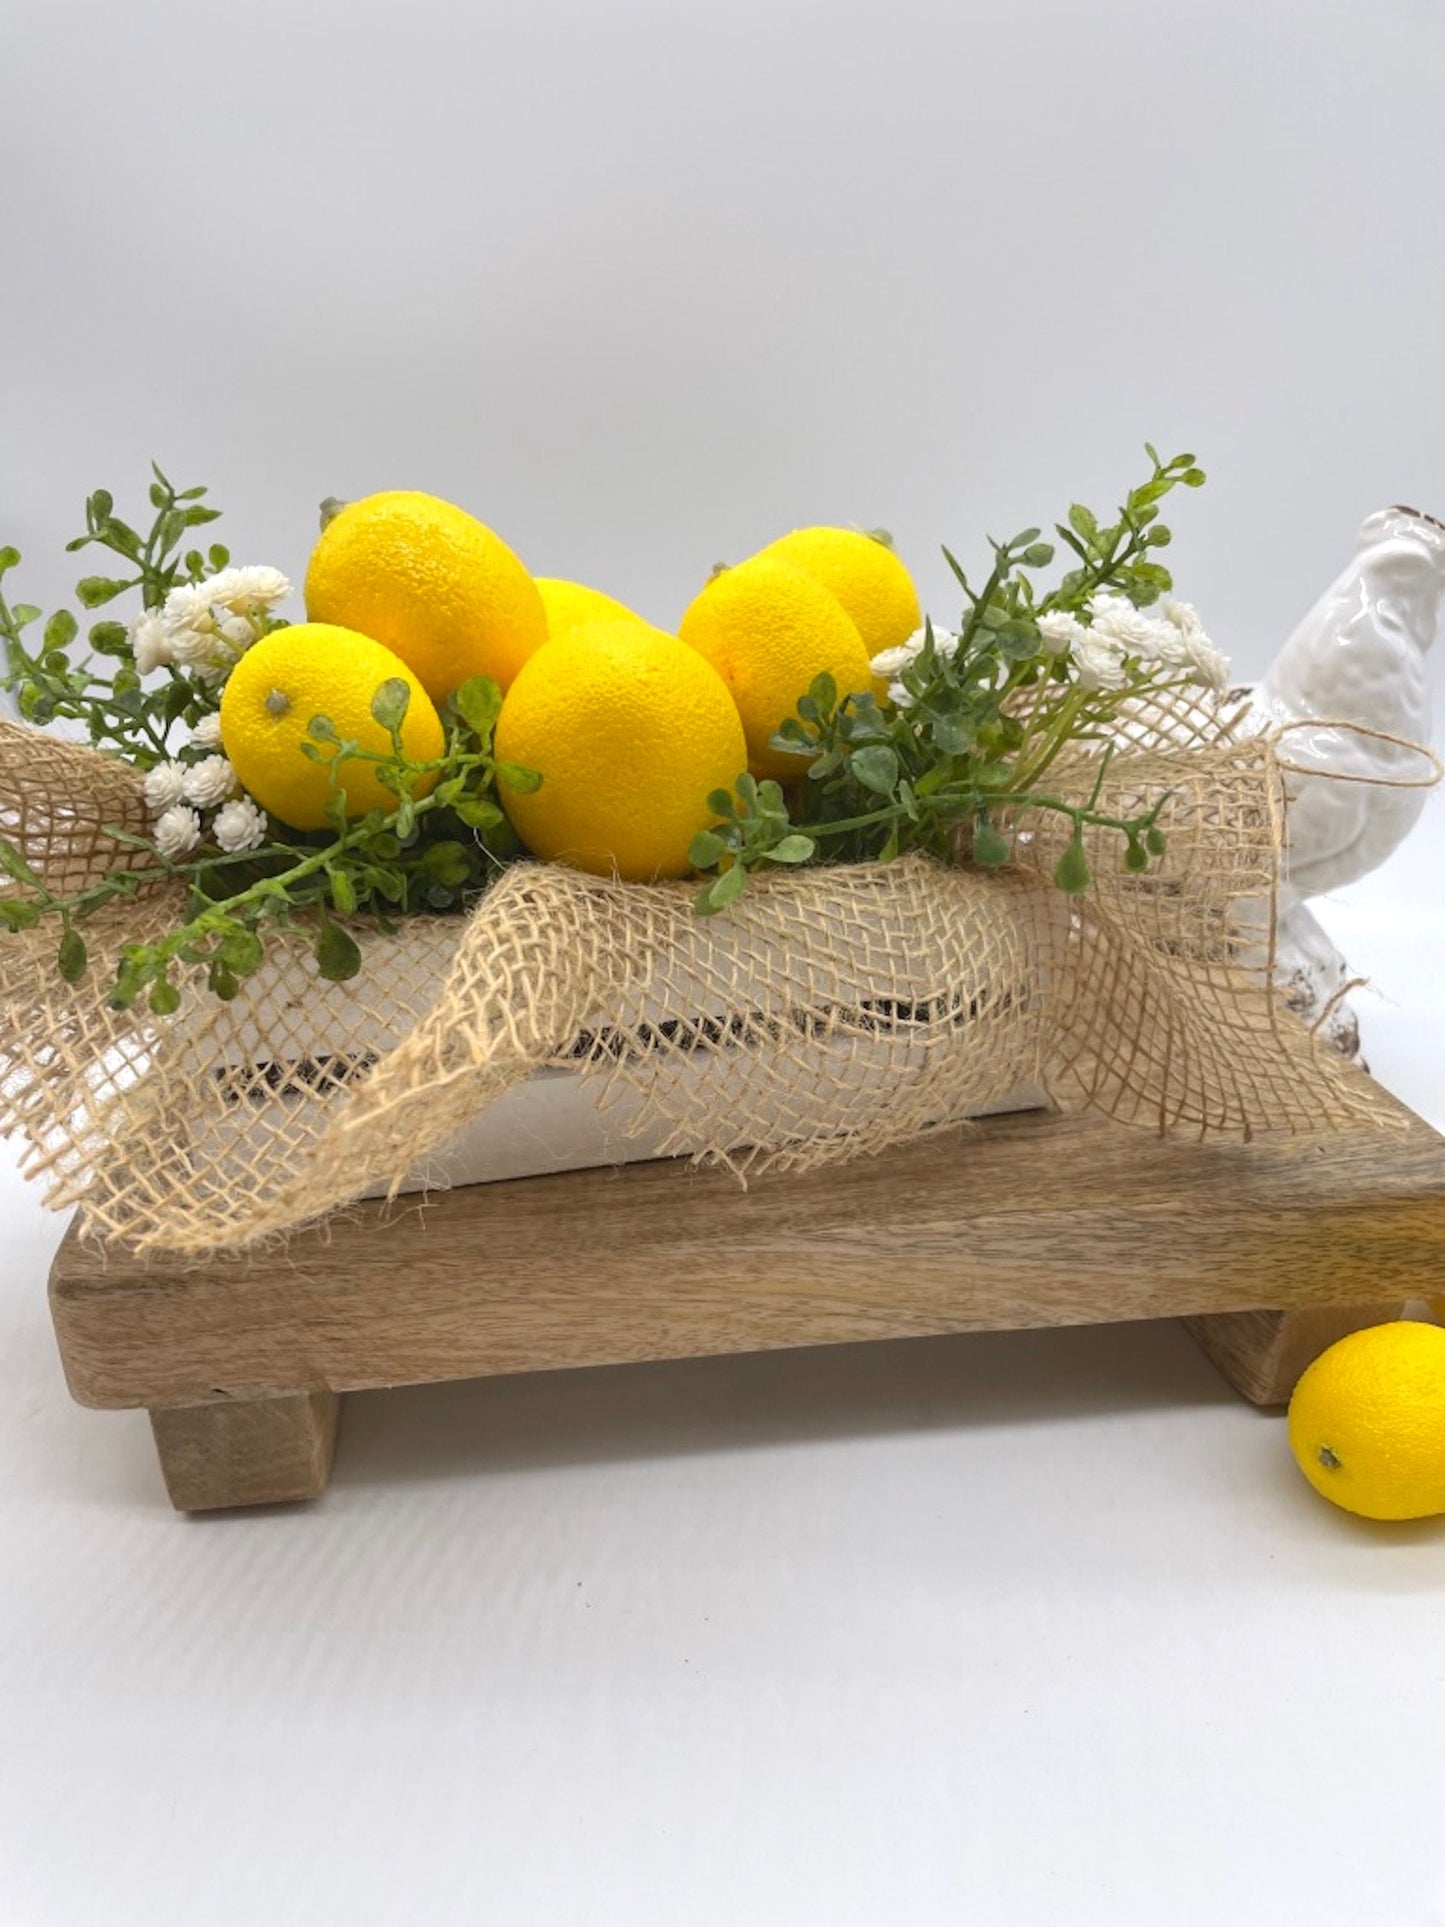 Lemon Mini Home Decor, Small Wooden Crate with Fake Lemons